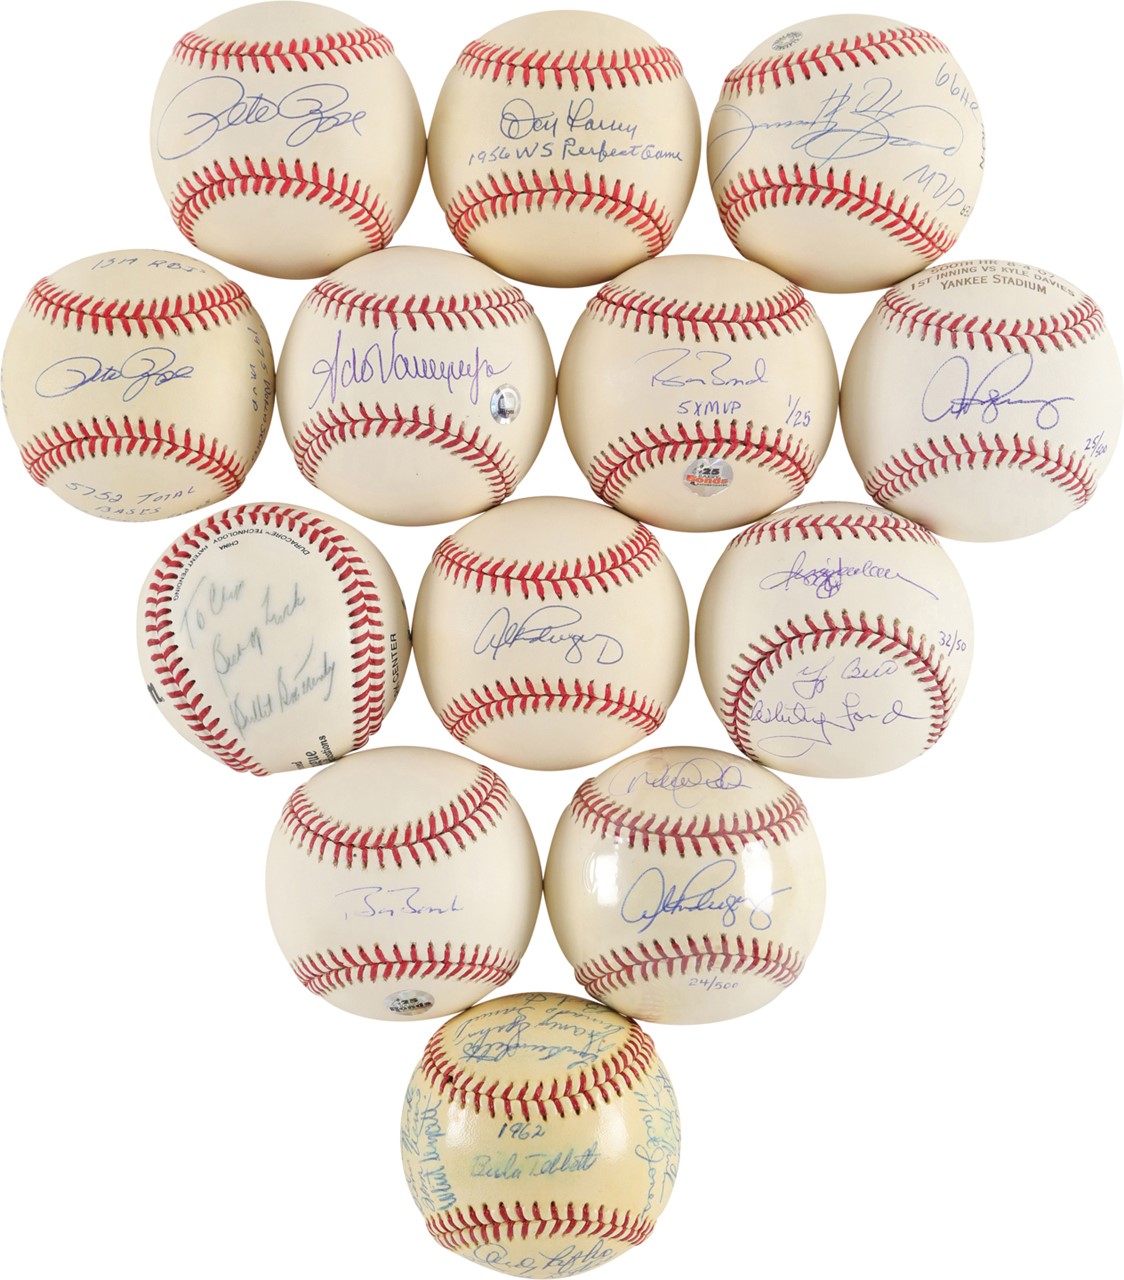 - Baseball Legends and Stars Signed Baseball Collection w/Derek Jeter (25)